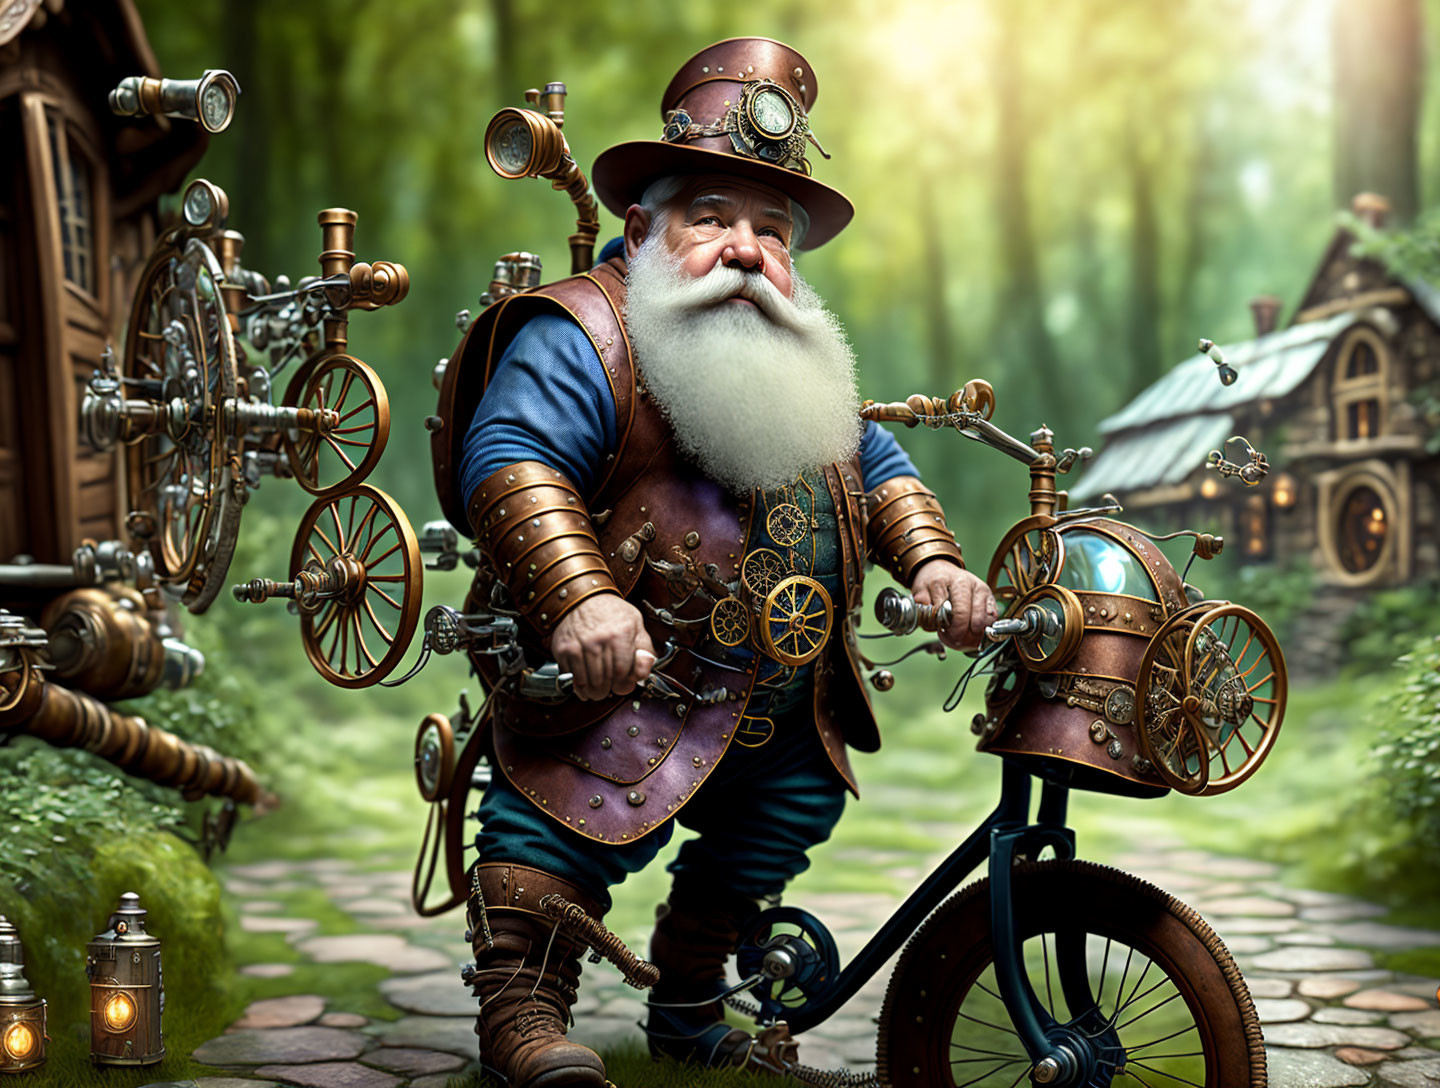 Dwarf Repairing His Bicycle